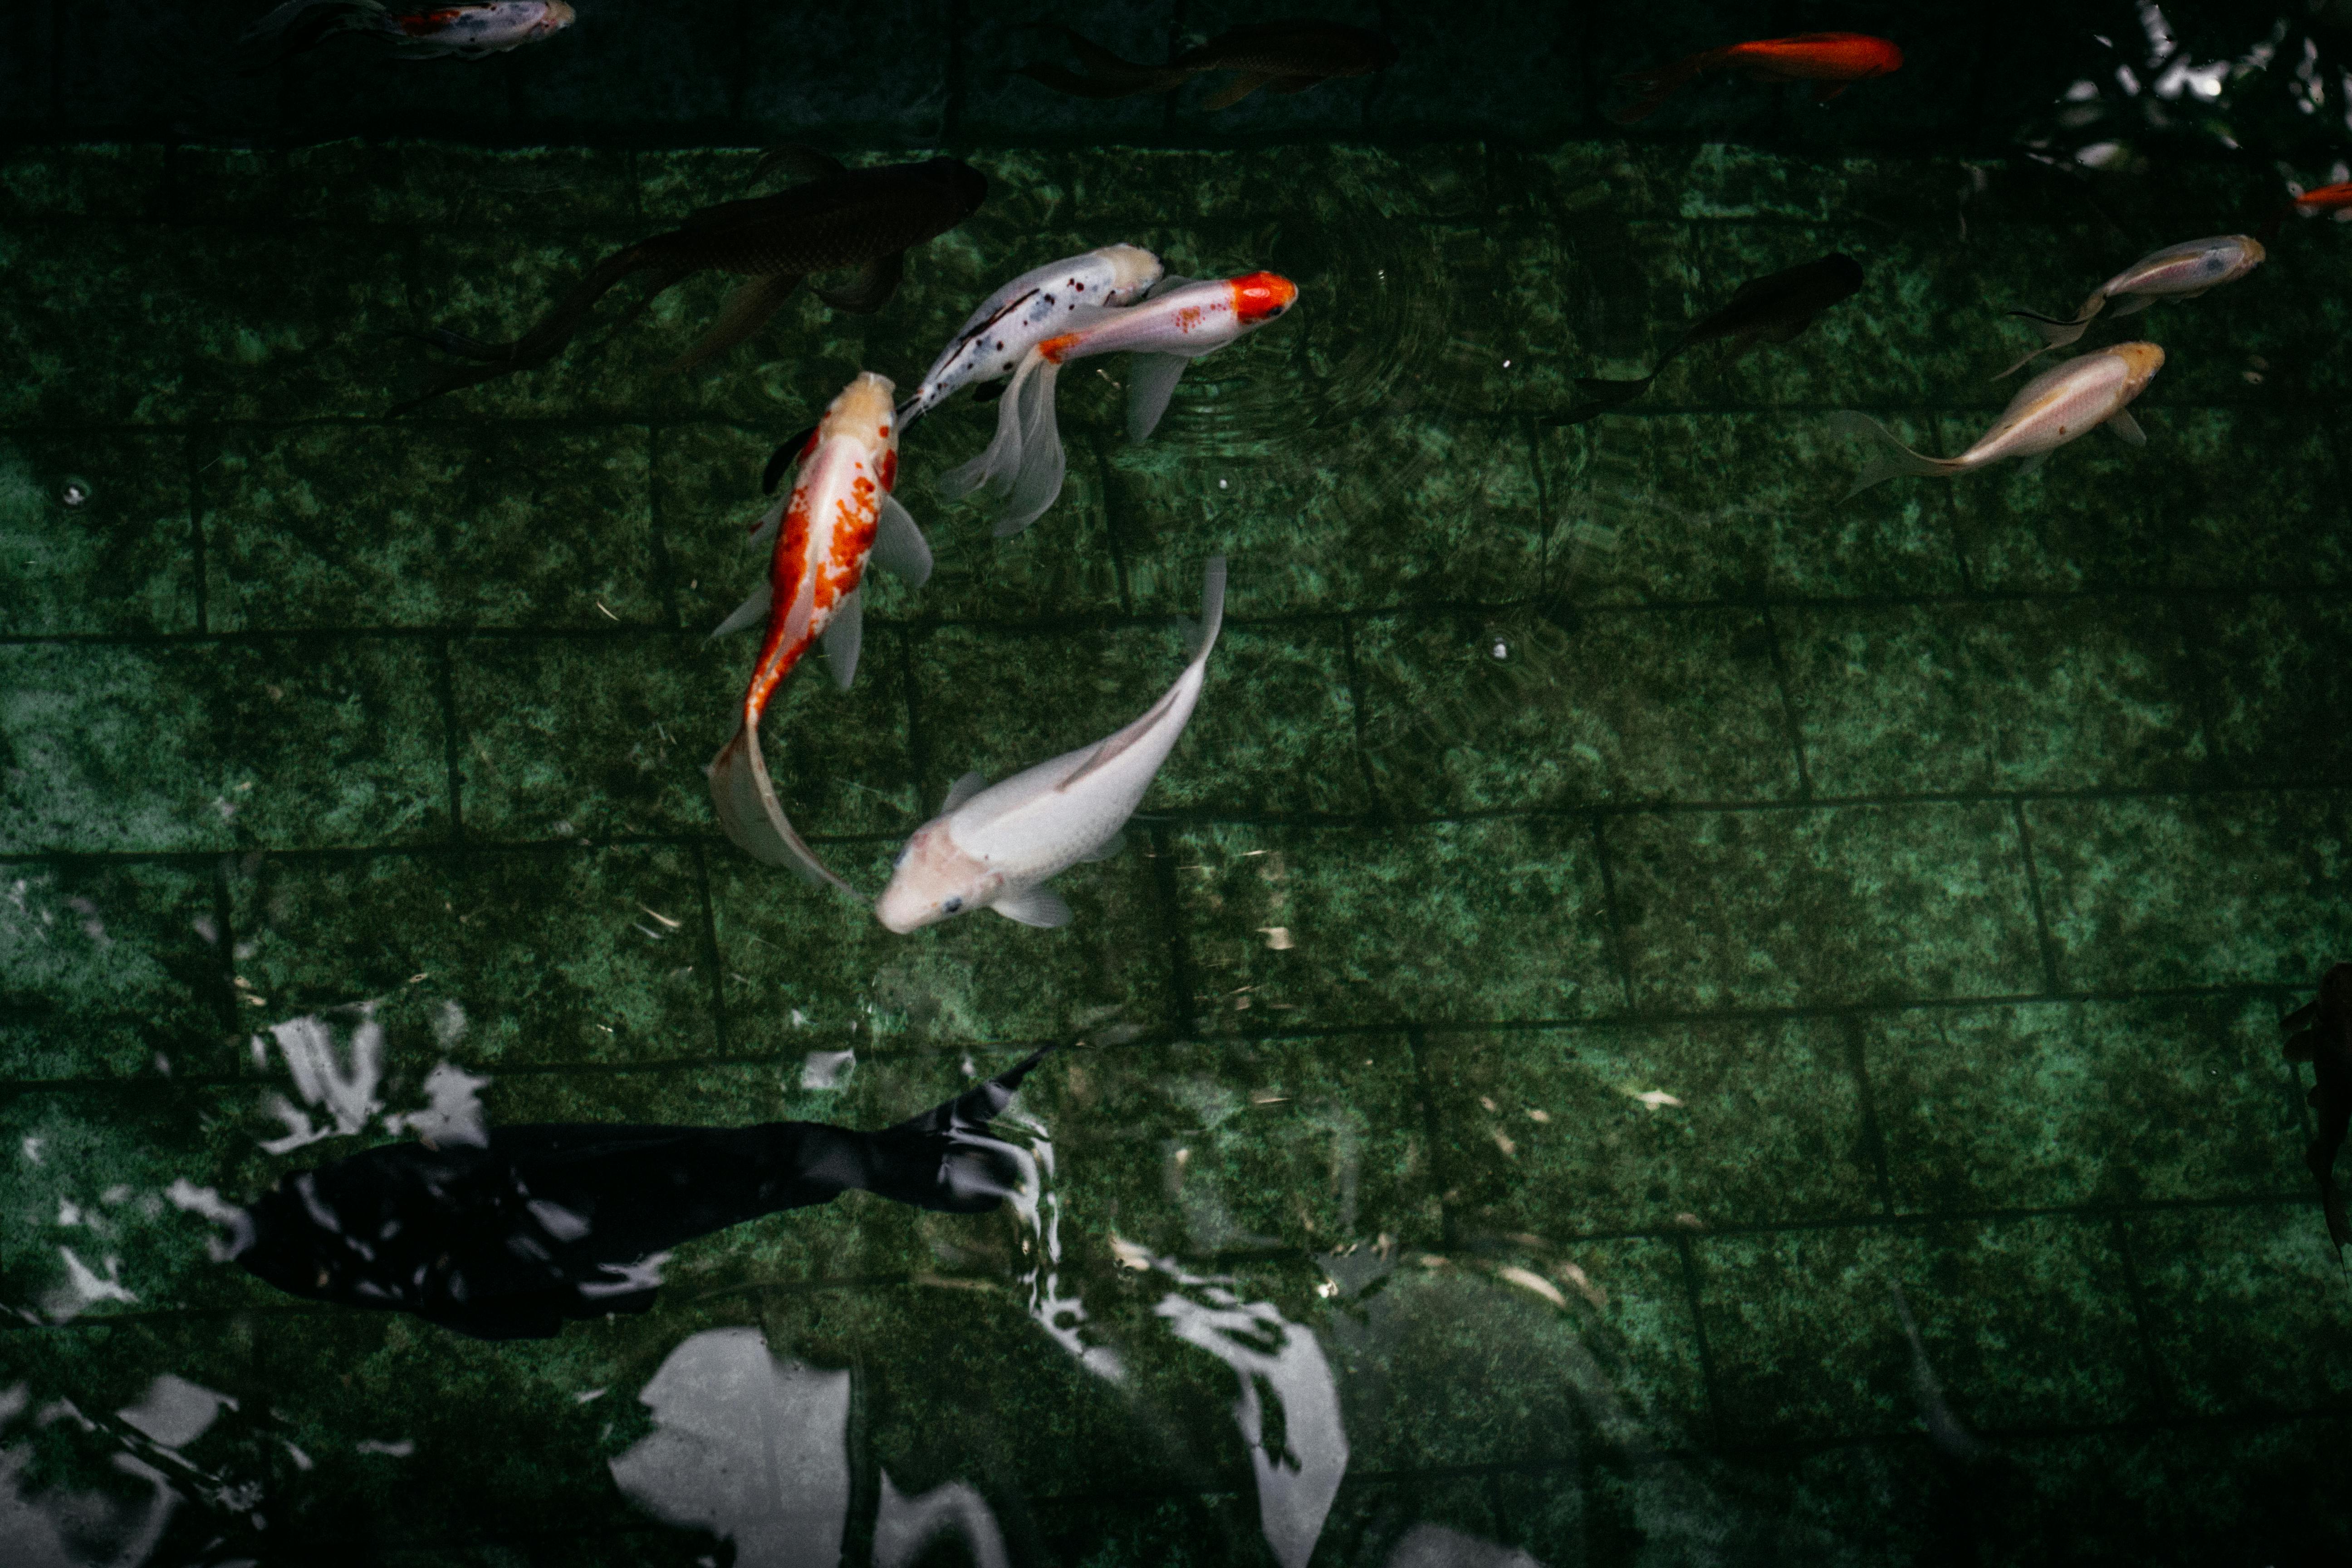 Koi Fish HD Wallpapers Free Download  PixelsTalkNet